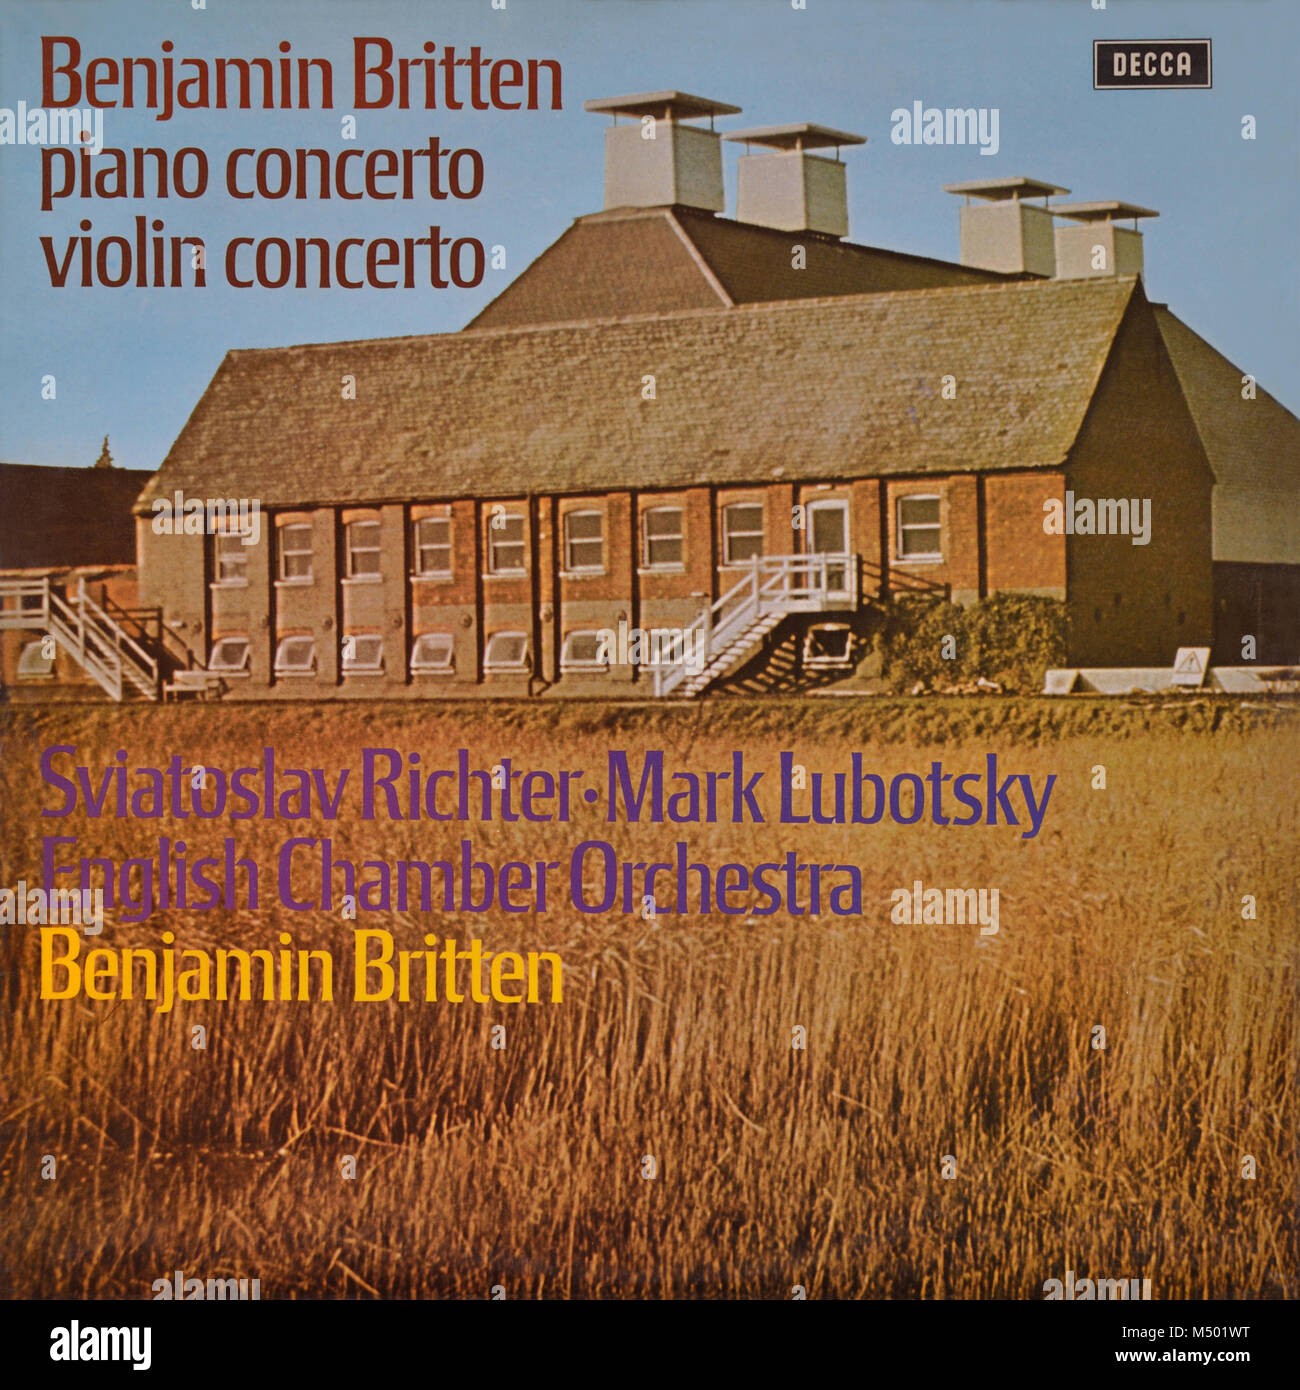 Benjamin Britten, Sviatoslav Richter, Mark Lubotsky, English Chamber Orchestra - original vinyl album cover - Piano Concerto / Violin Concerto - 1971 Stock Photo